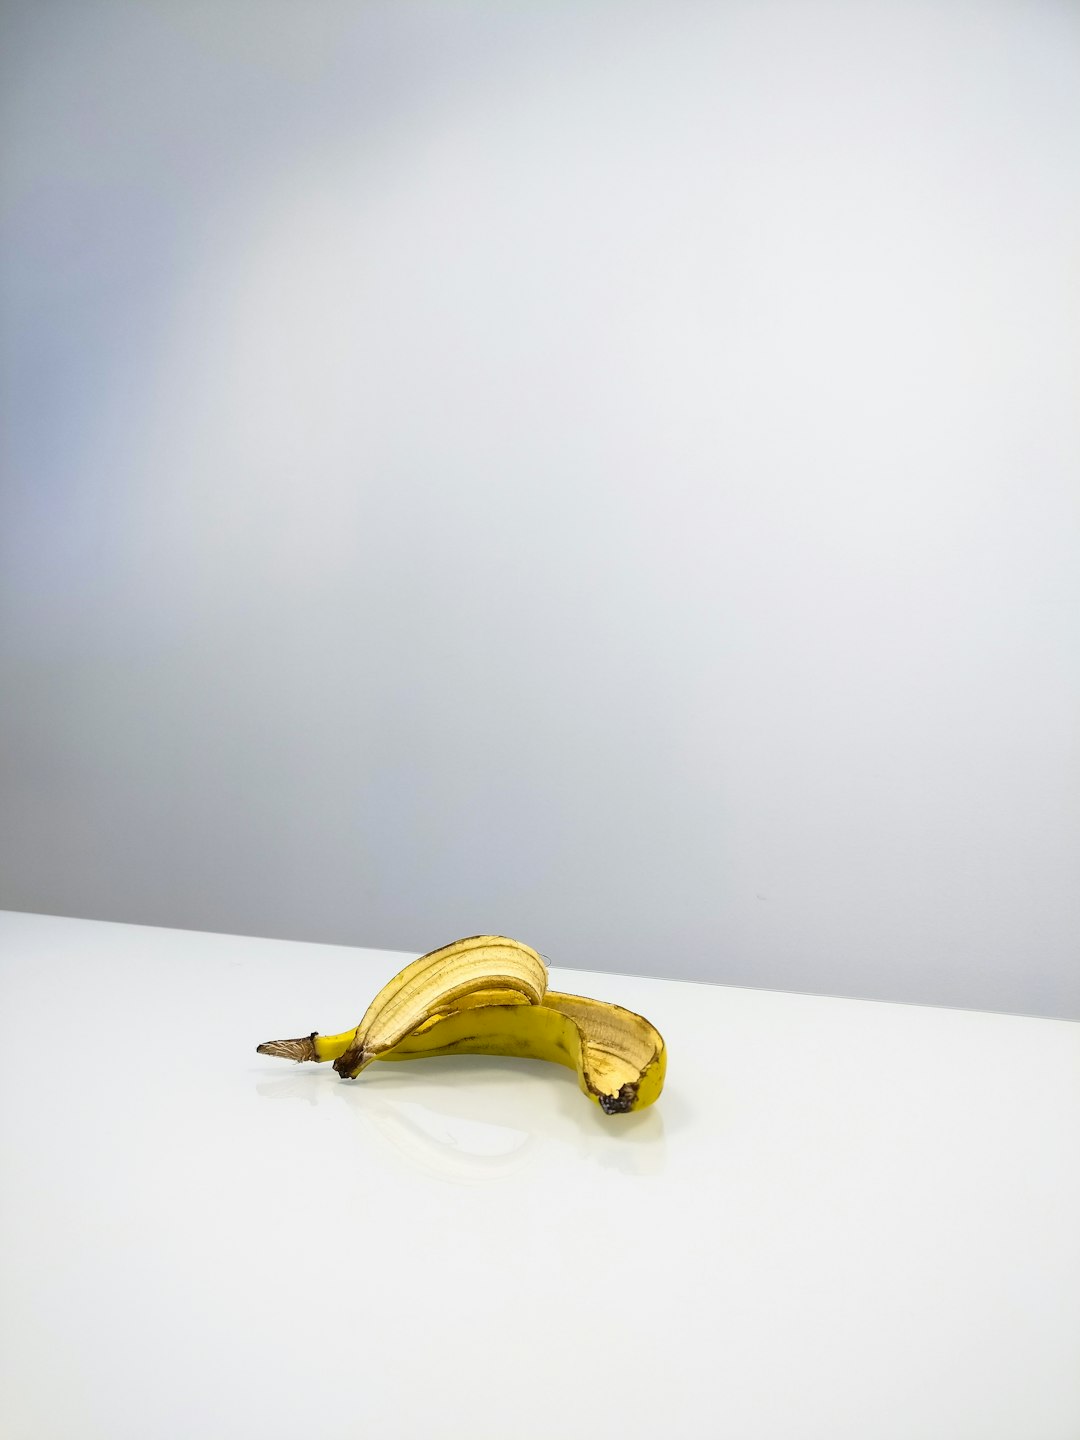 banana peel on table